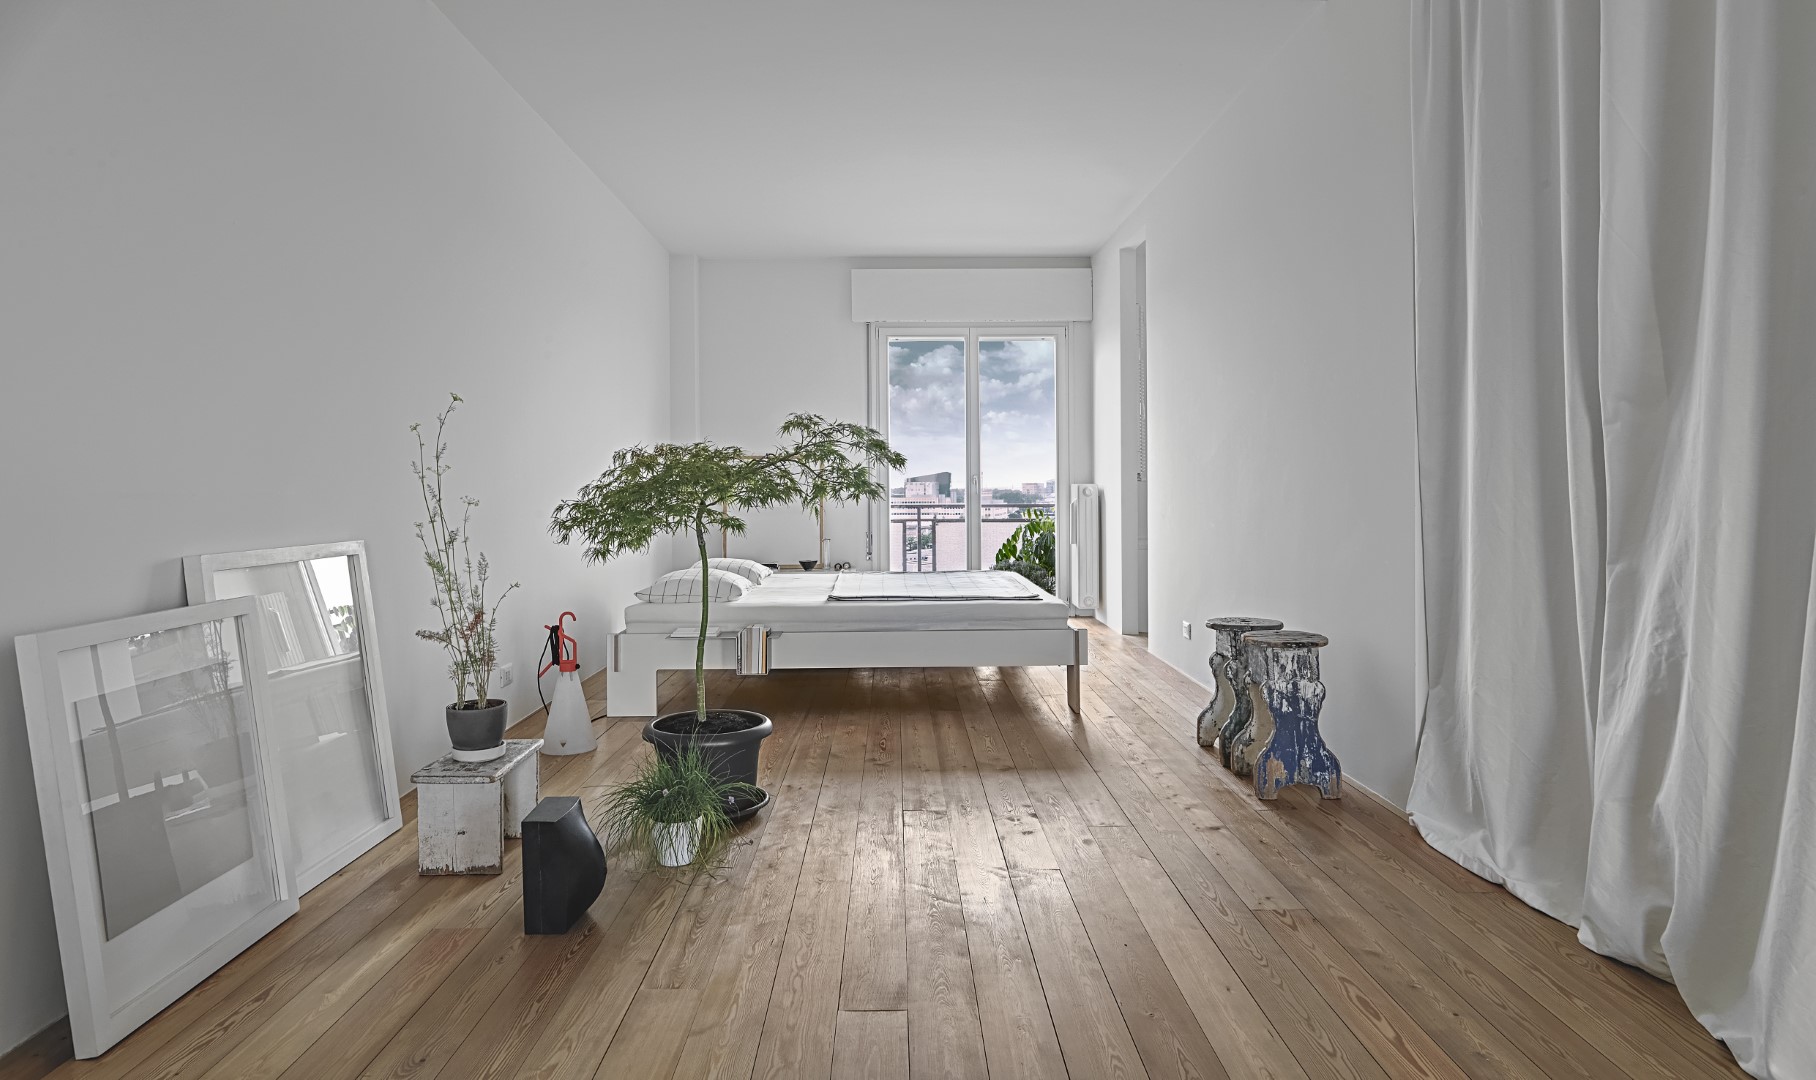 Interiors Of The Modern Bedroom With Wood Floor 2023 11 27 05 20 32 Utc